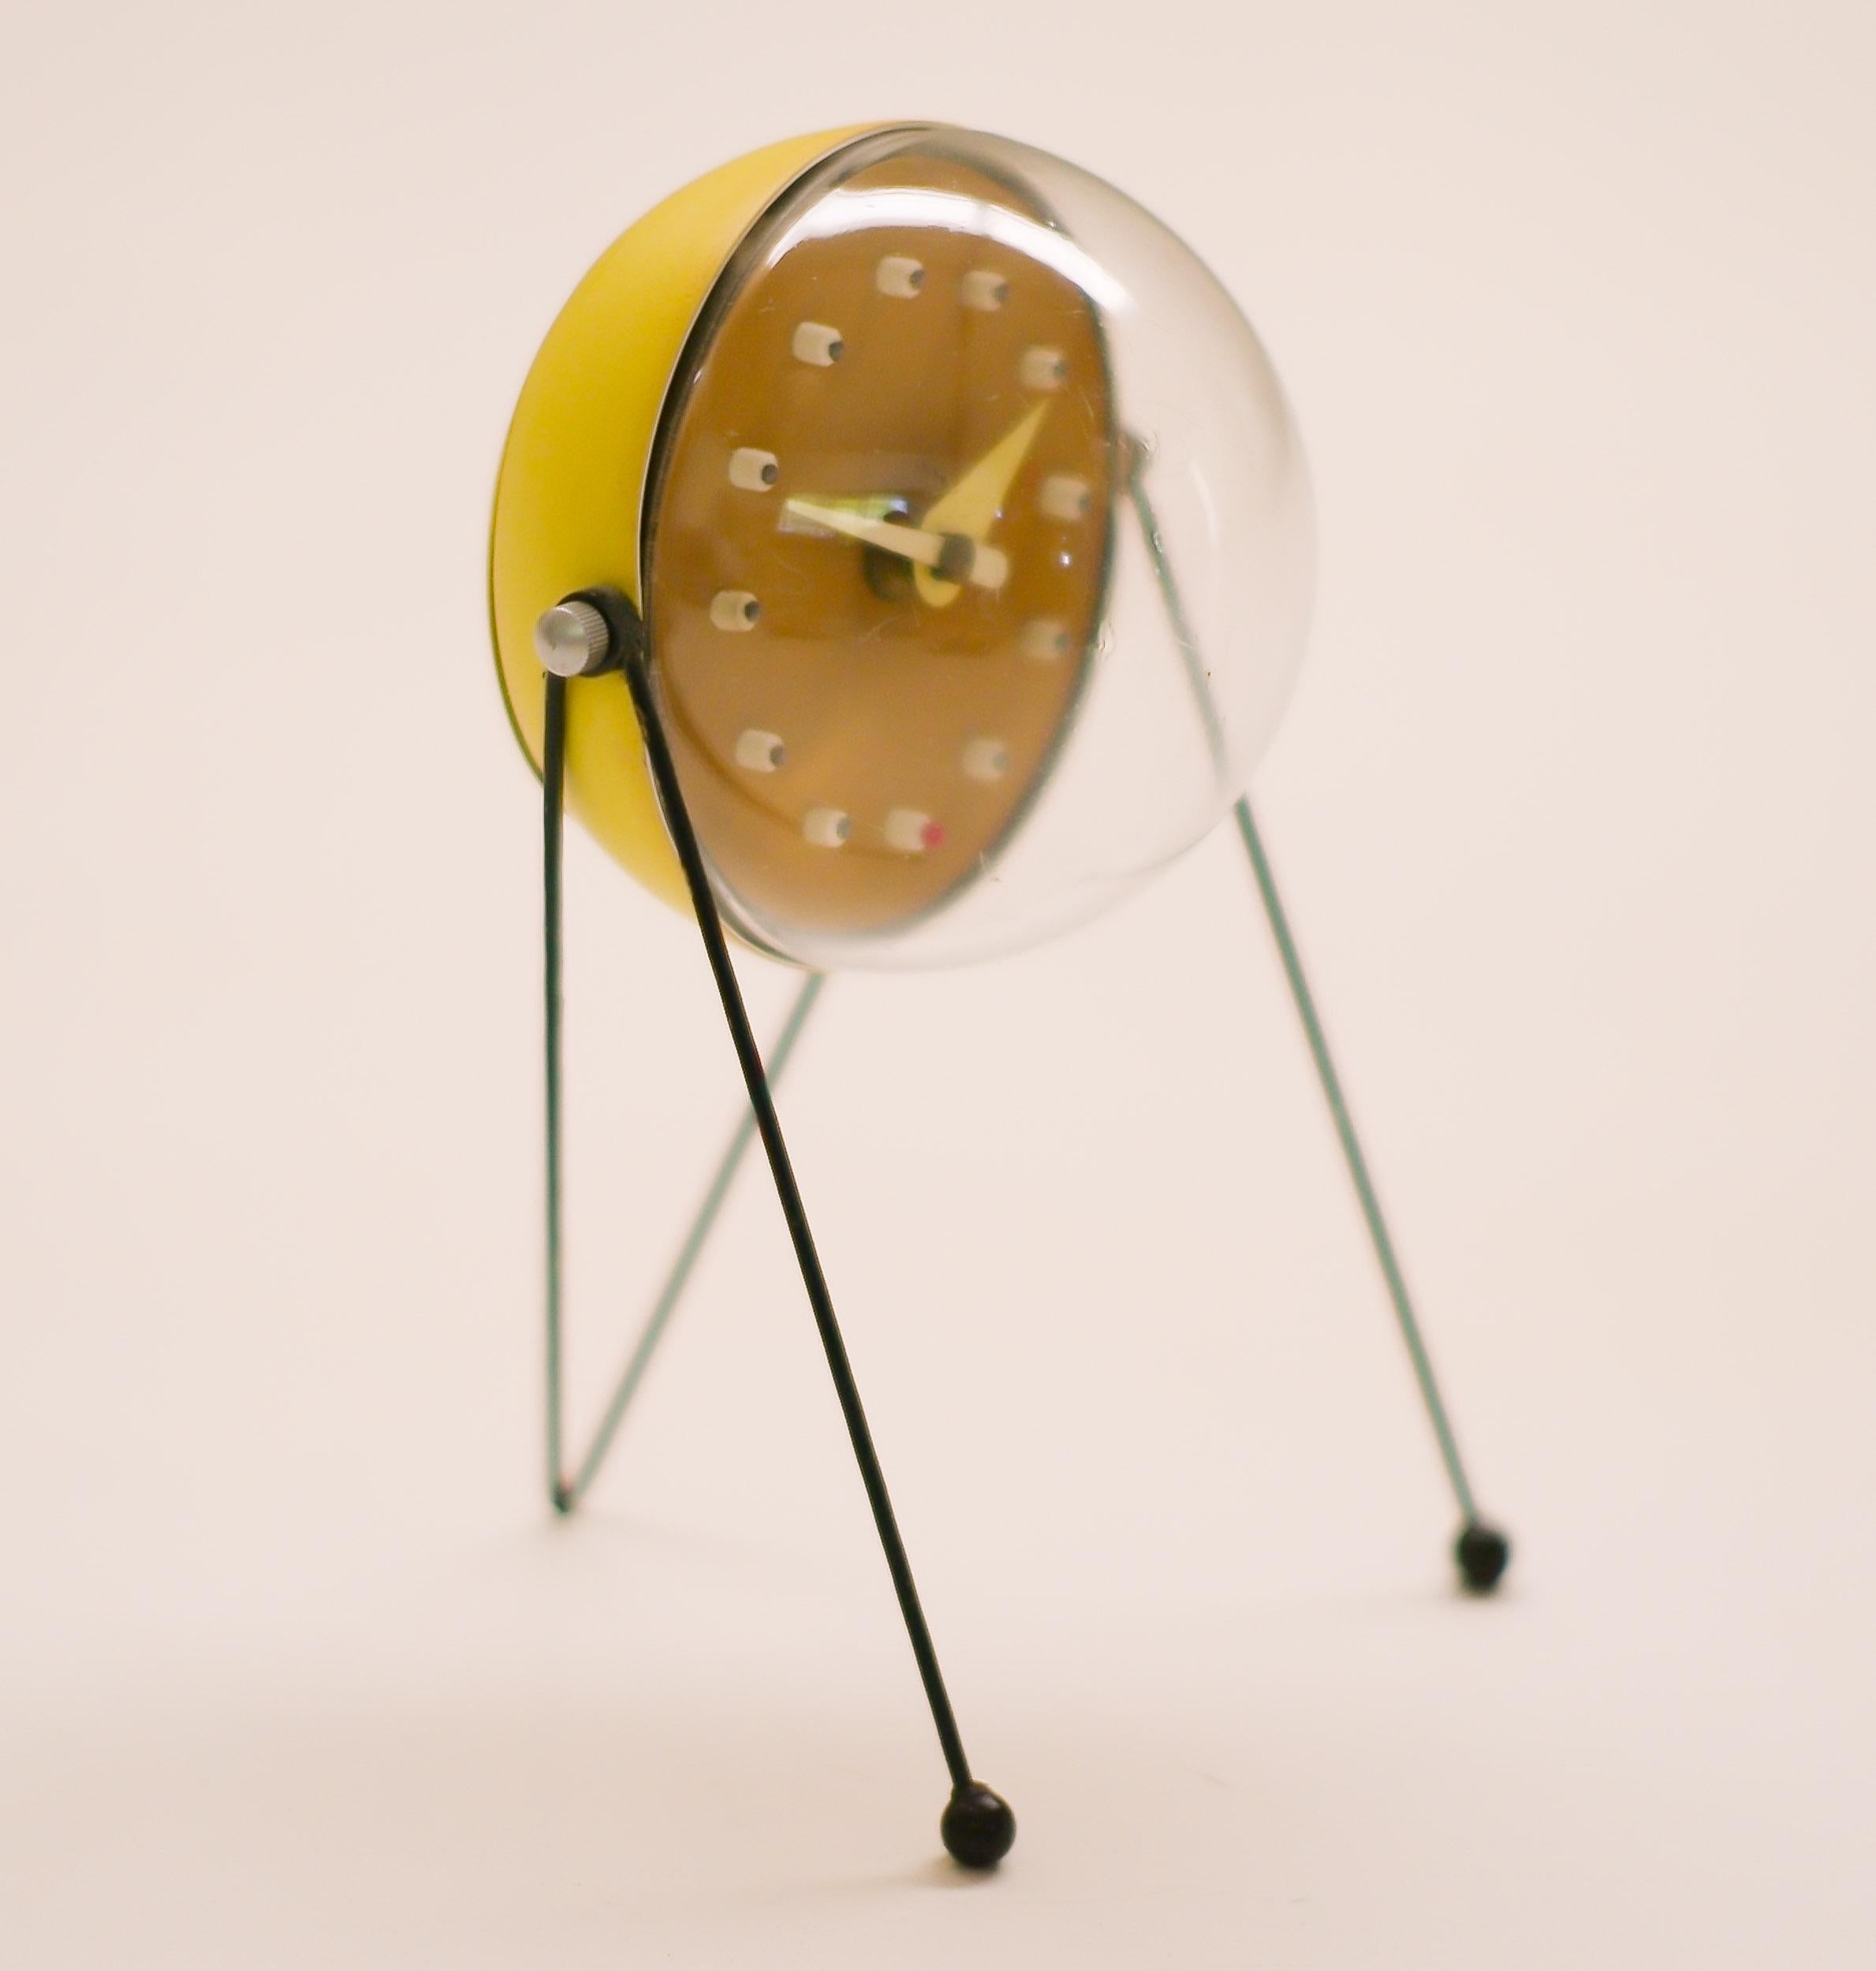 Enameled 1950s Atomic Inspired Table Clock